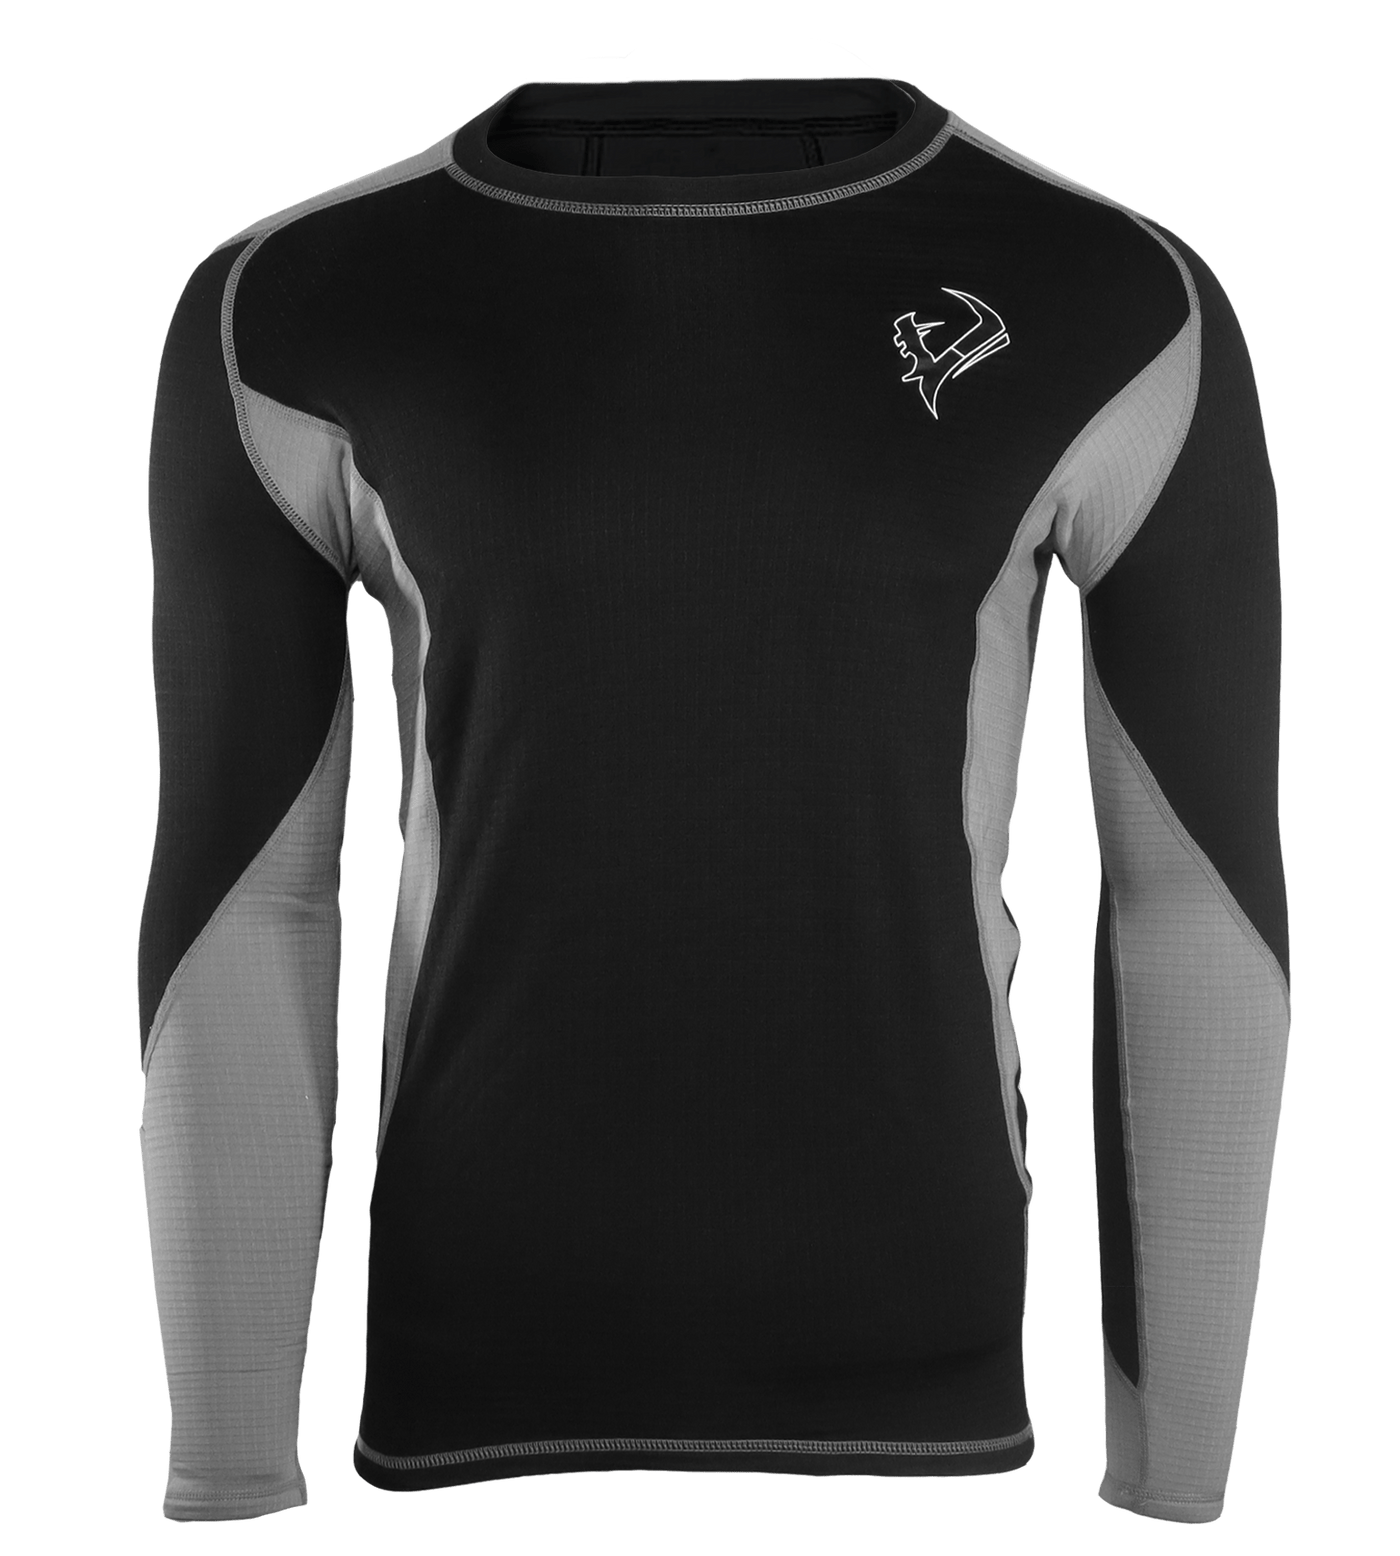 Pyrex Extreme Shirt - Black/Gray - Vycah